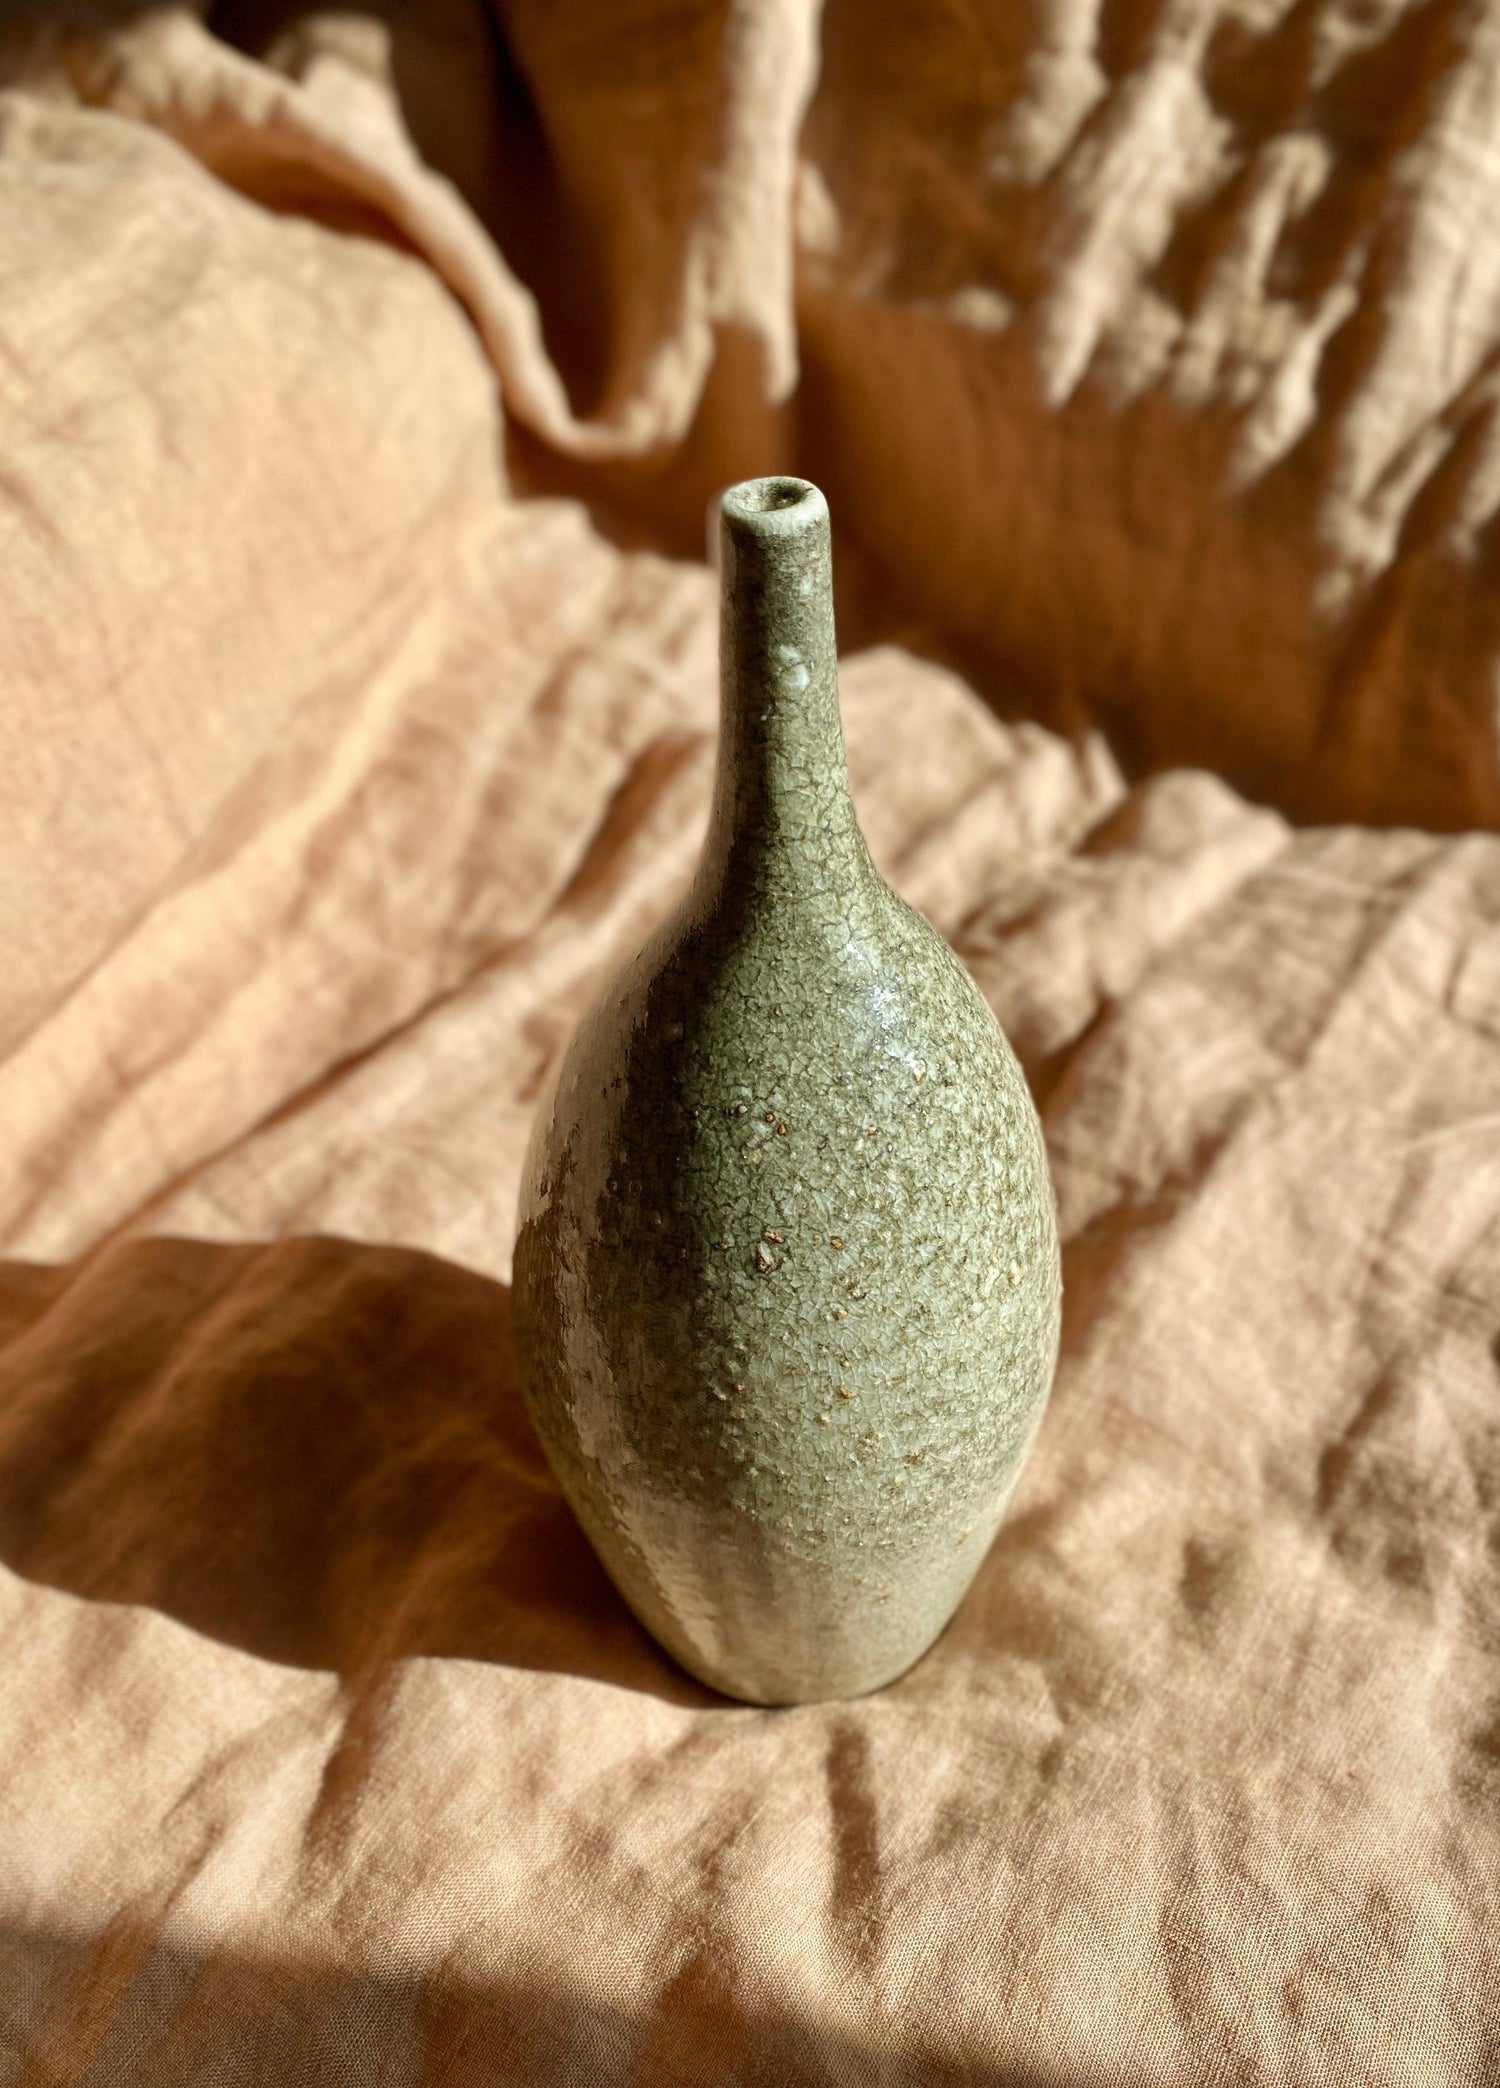 Set of 3 shino decorative vases - Dana Chieco Studio